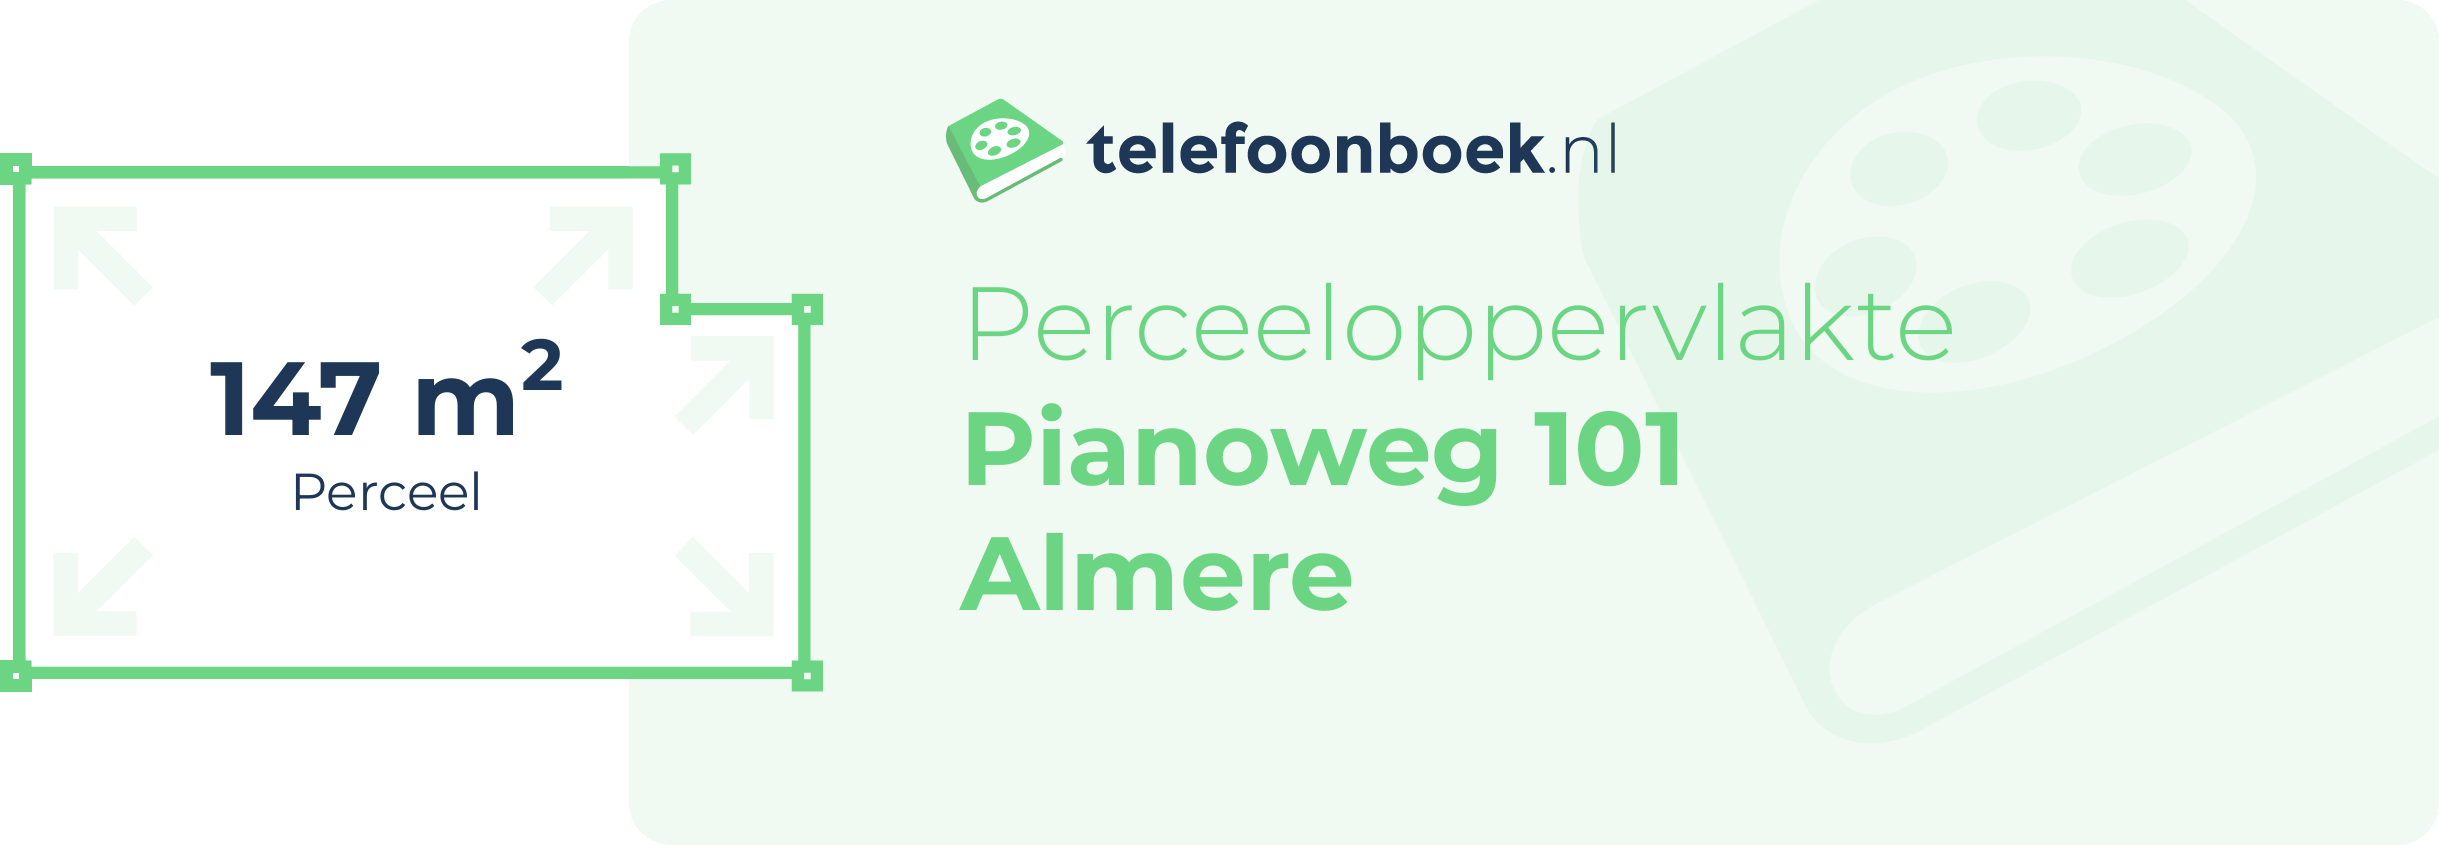 Perceeloppervlakte Pianoweg 101 Almere